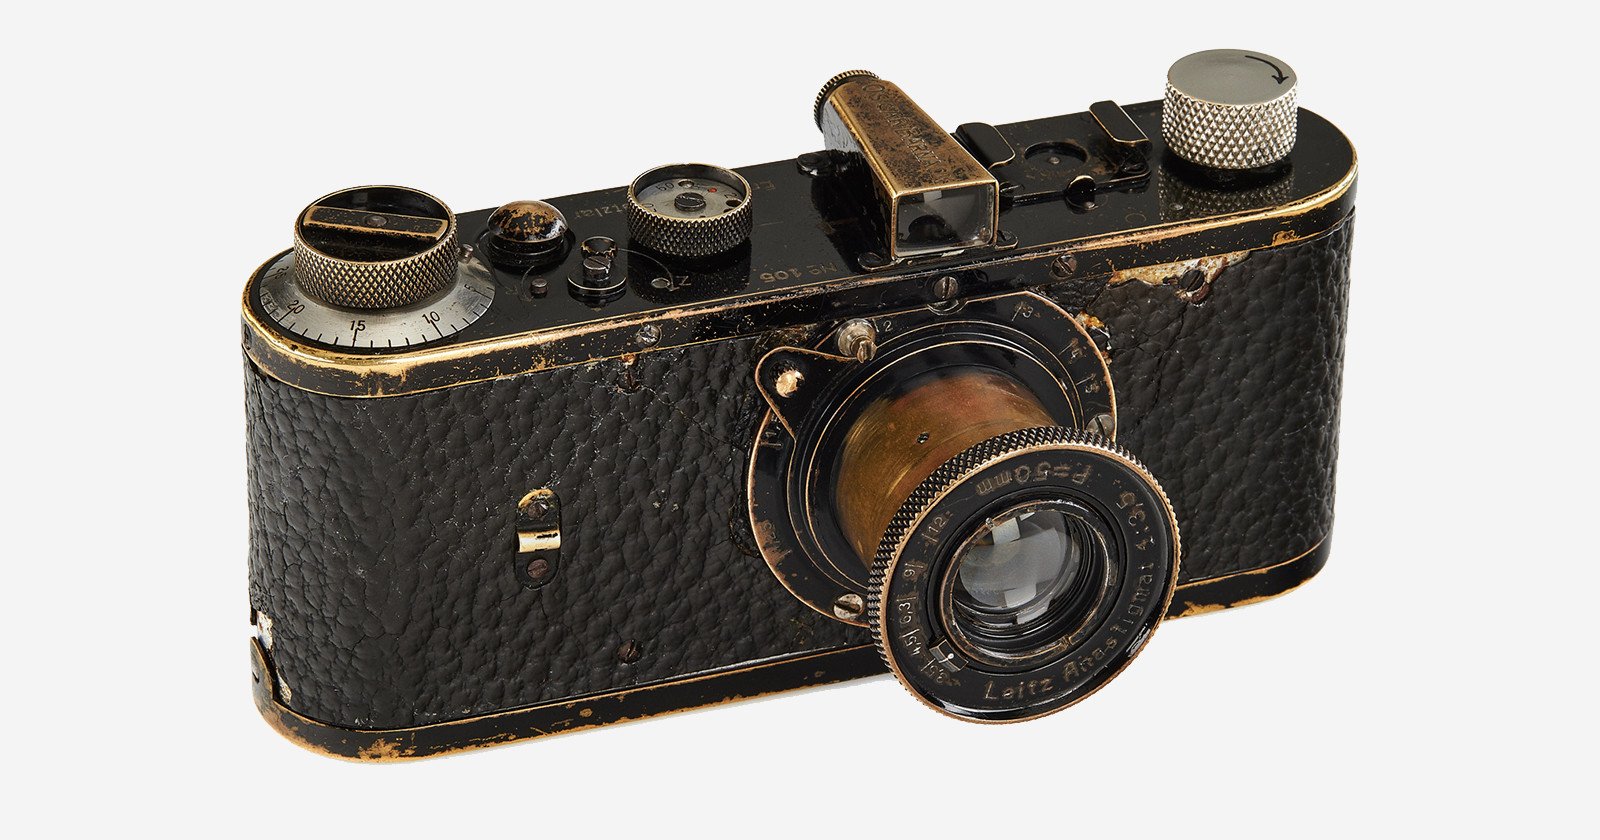 Oskar Barnack’s Leica Sells for $15M, is Now World’s Priciest Camera